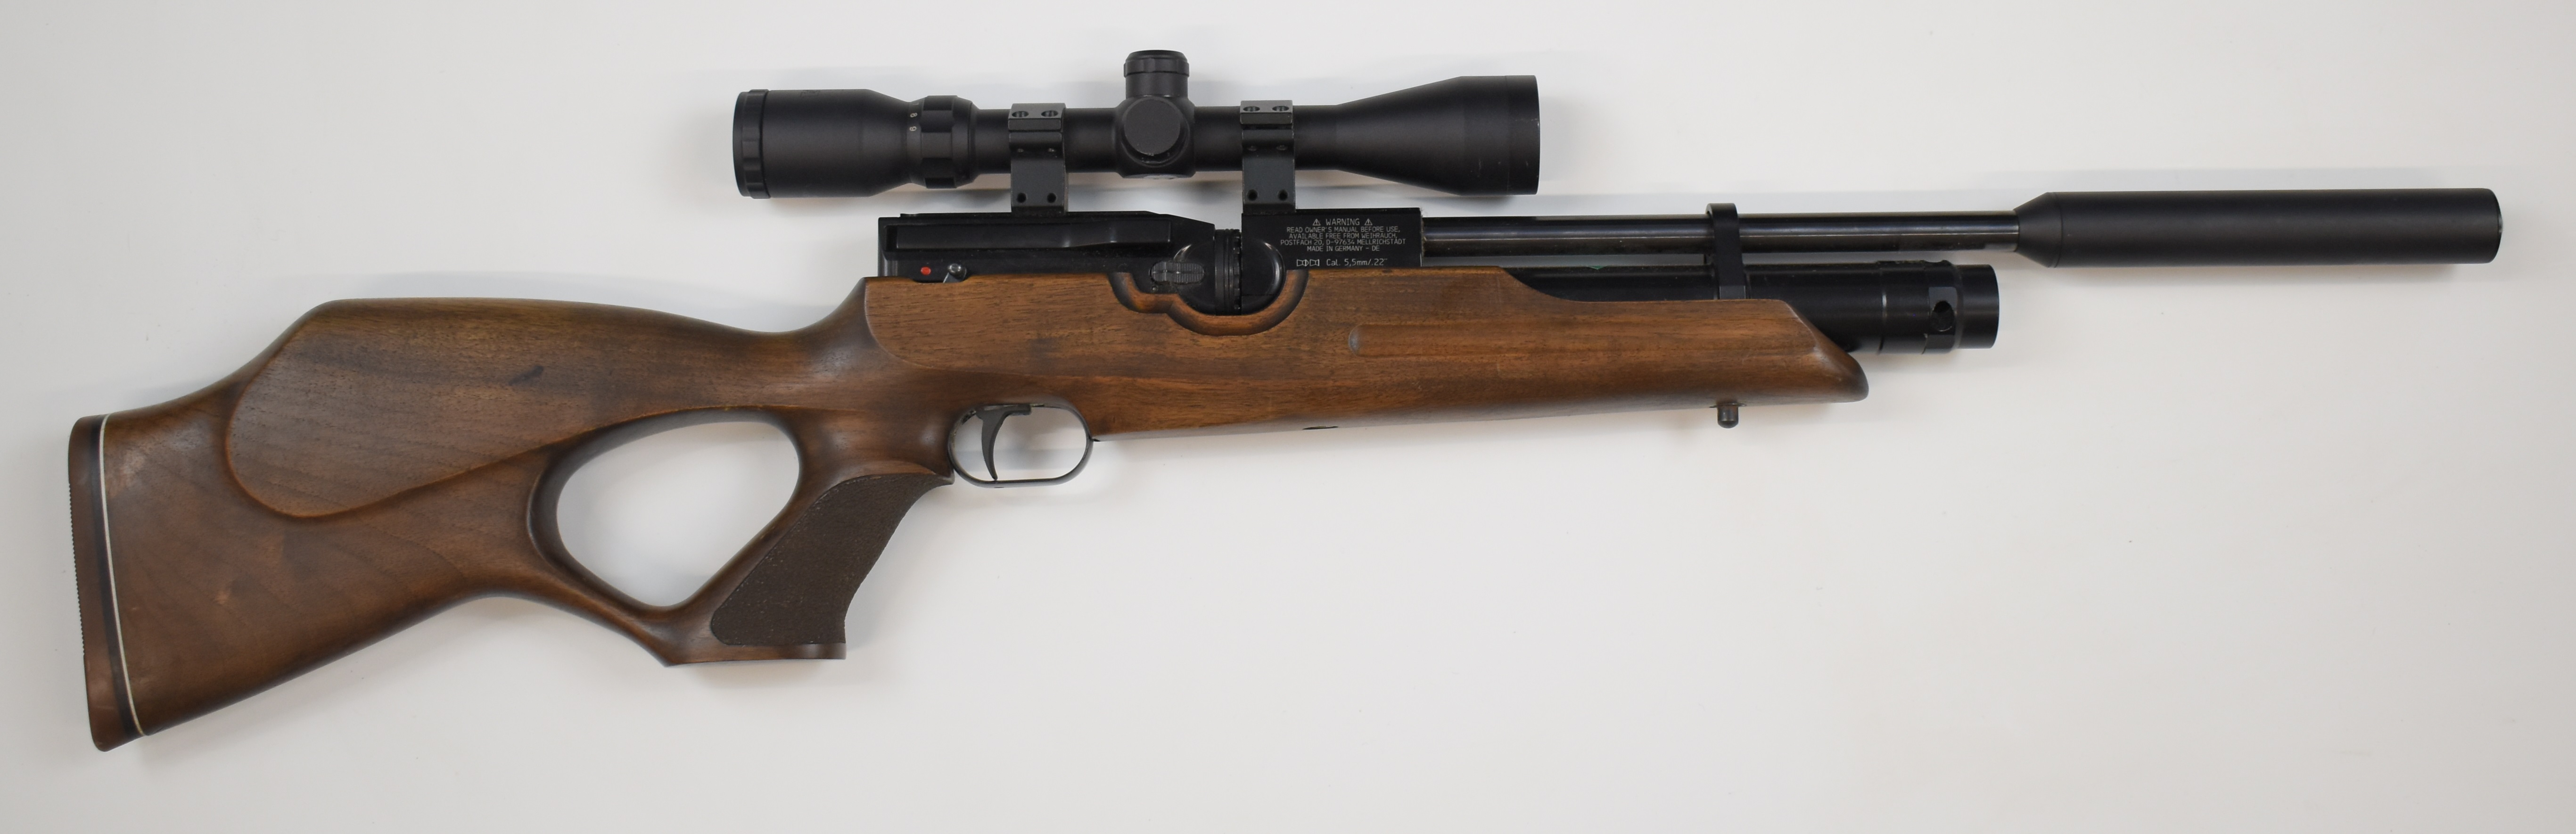 Weihrauch HW100 .22 PCP air rifle with textured semi-pistol grip, raised cheek piece, adjustable - Image 2 of 11